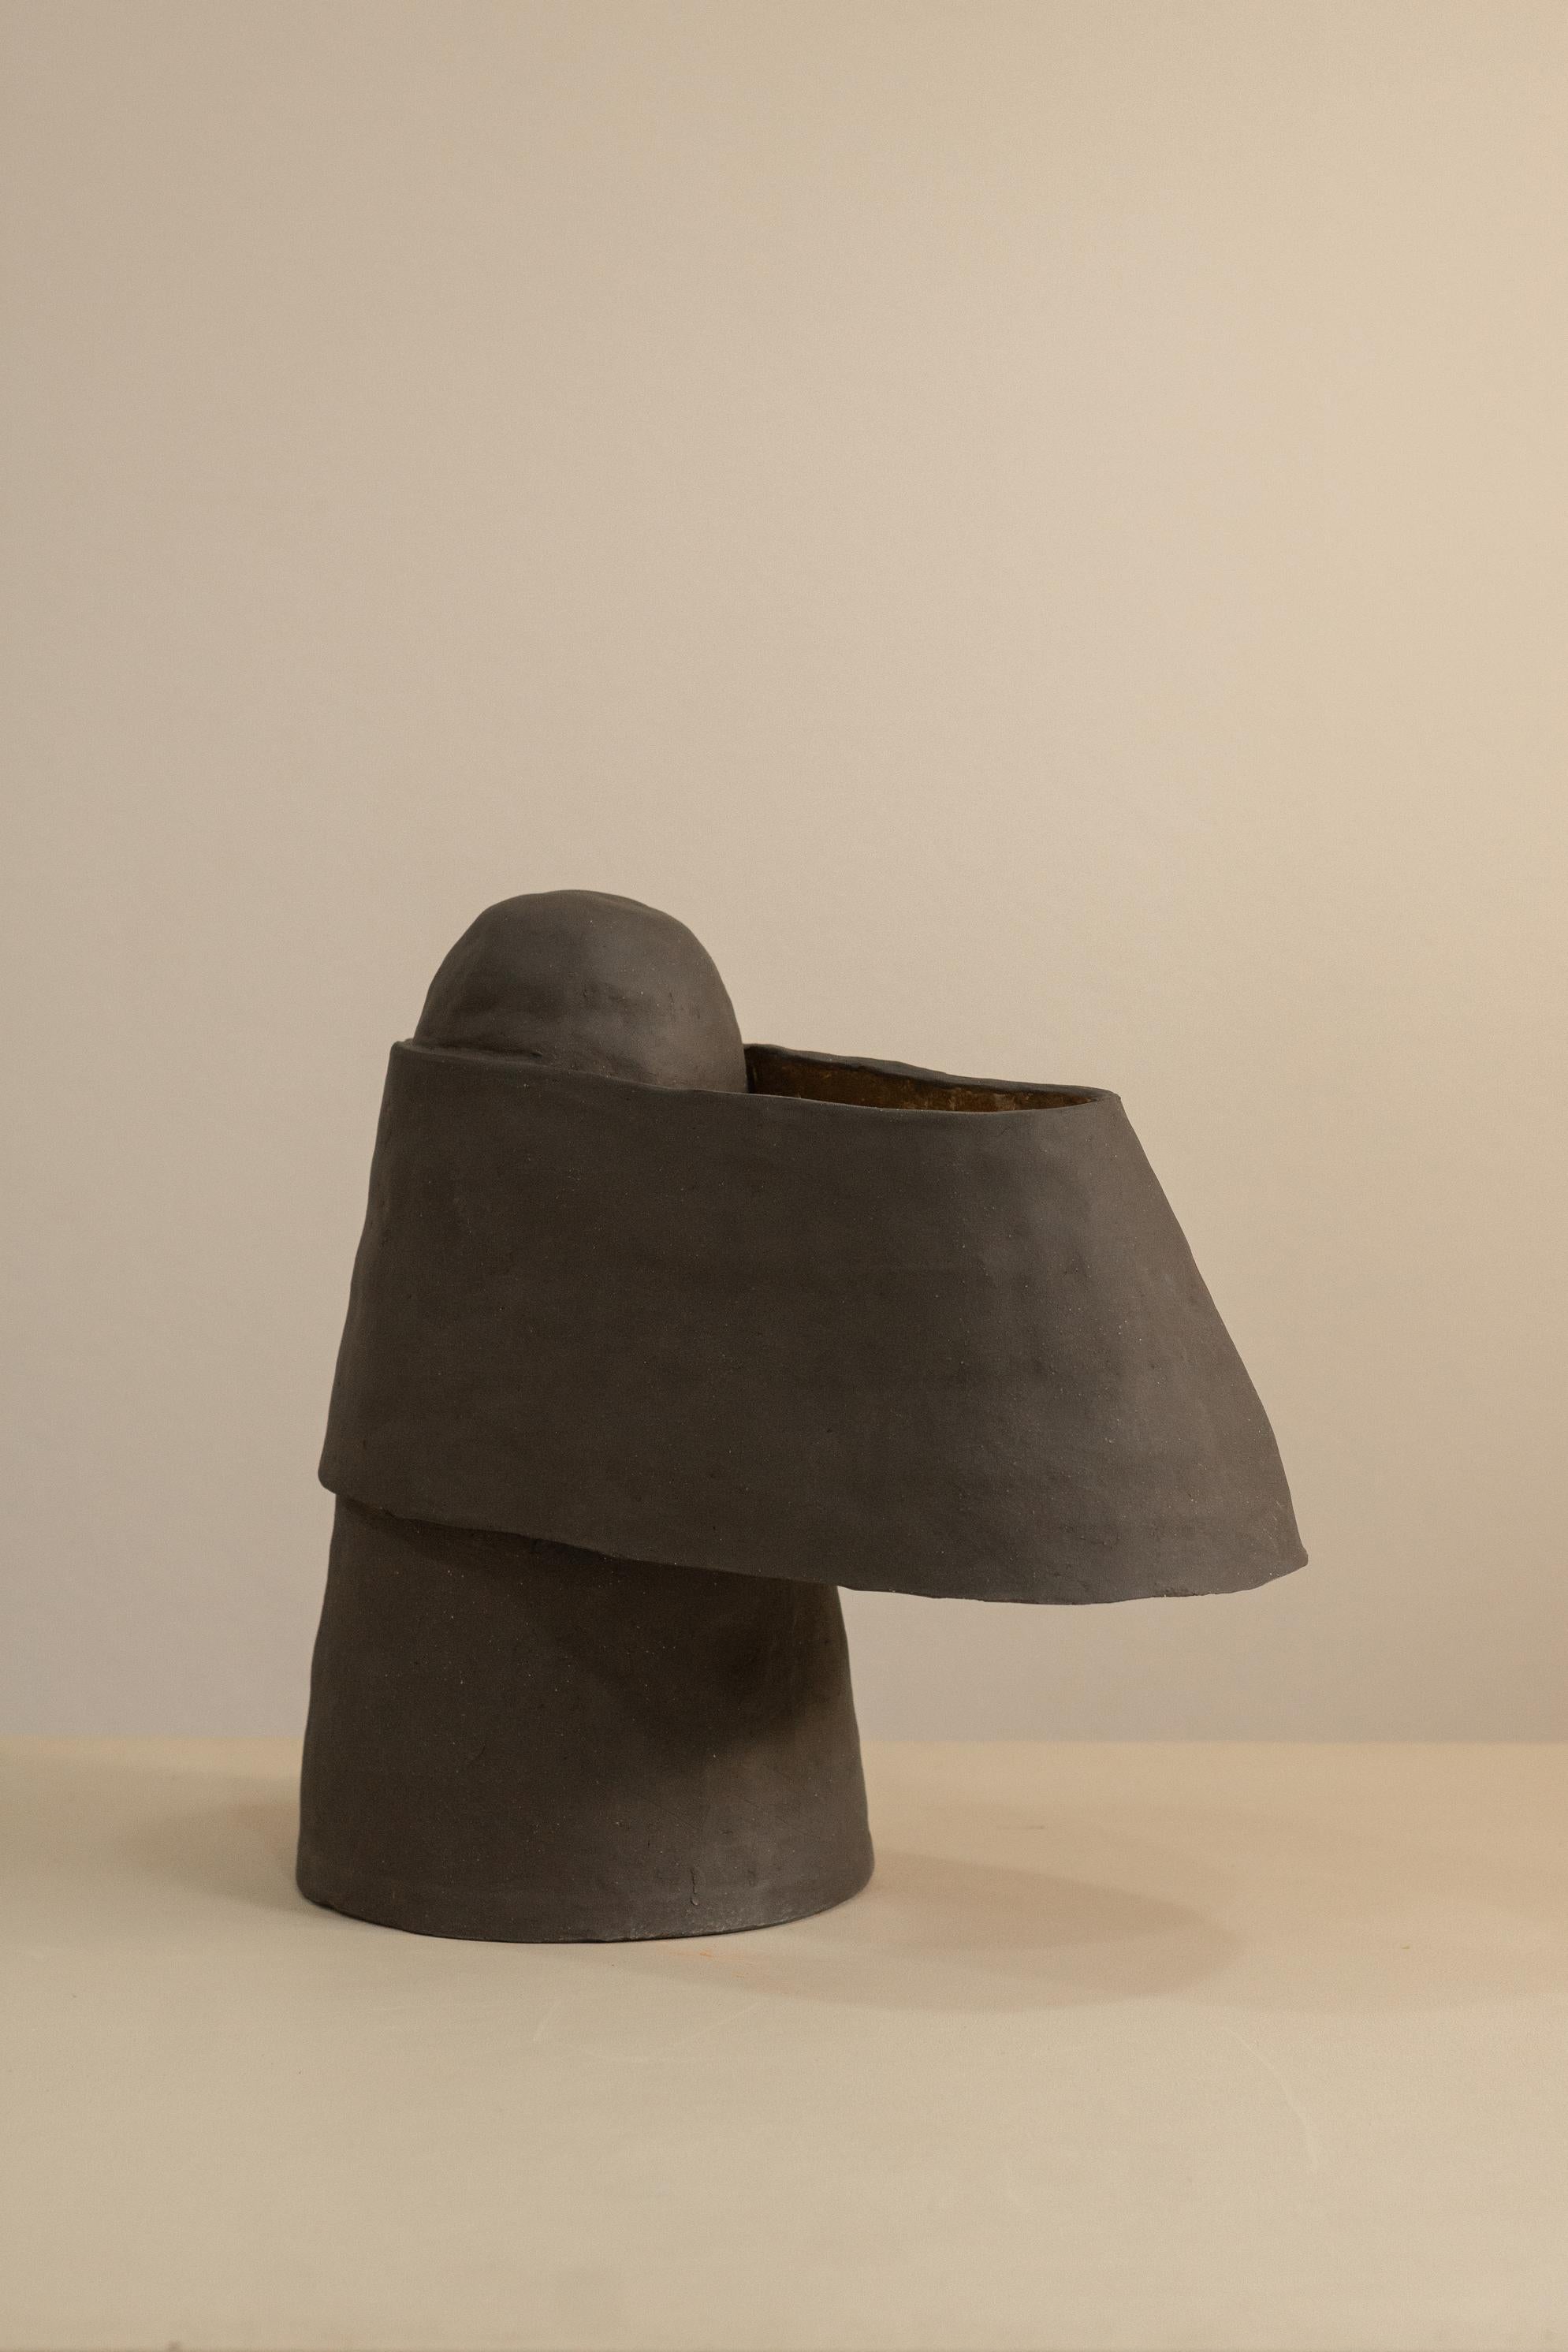 Brazilian Black Ceramic Table Lamp Light Sculpture Handcrafted For Sale